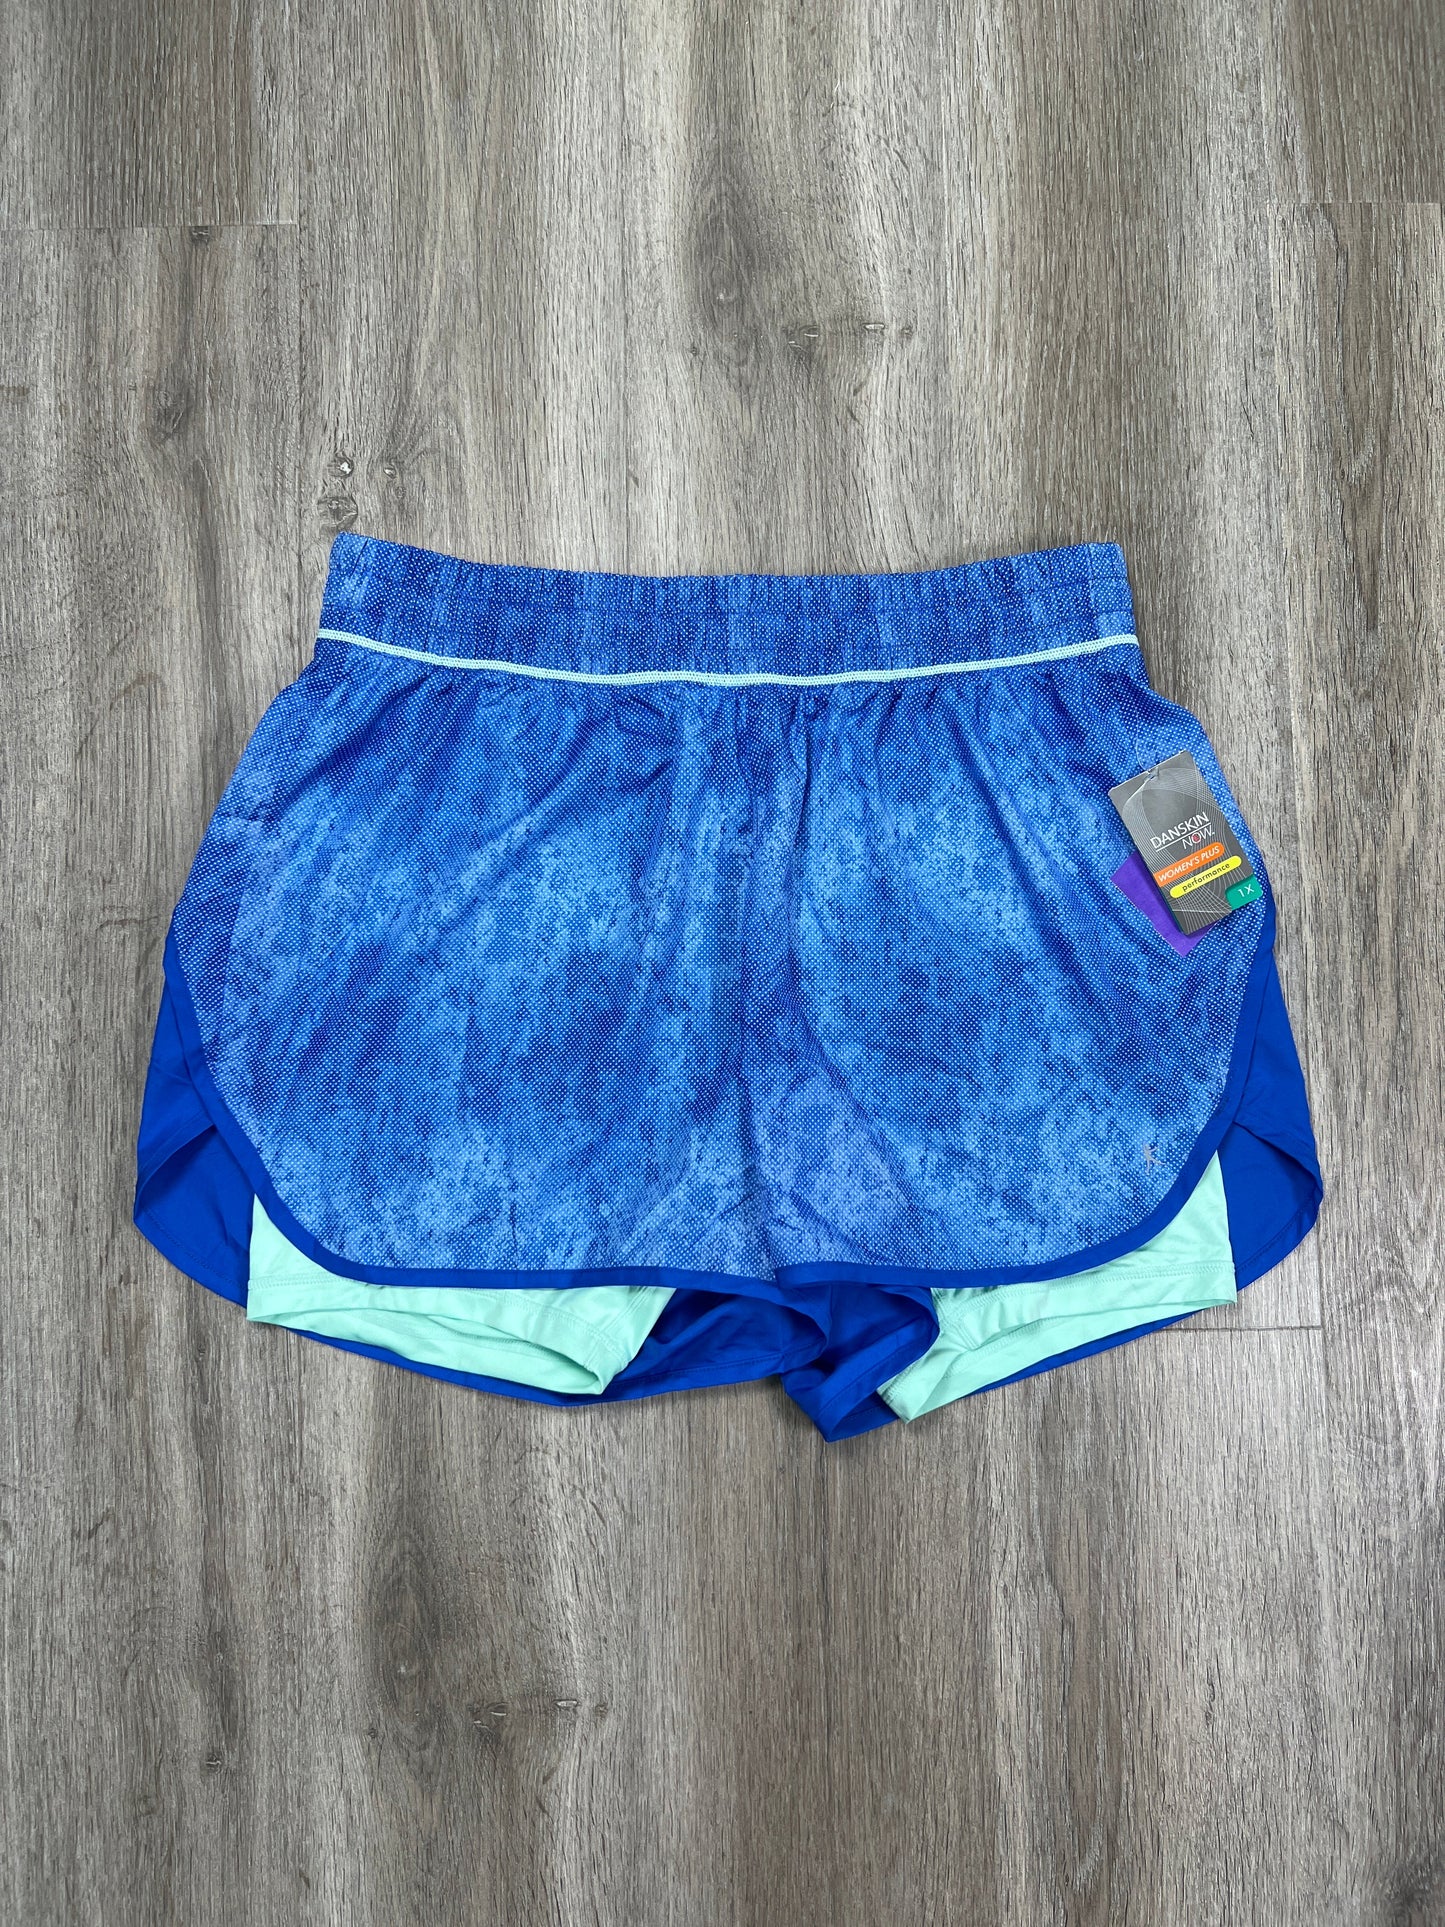 Blue Athletic Shorts Danskin, Size 1x